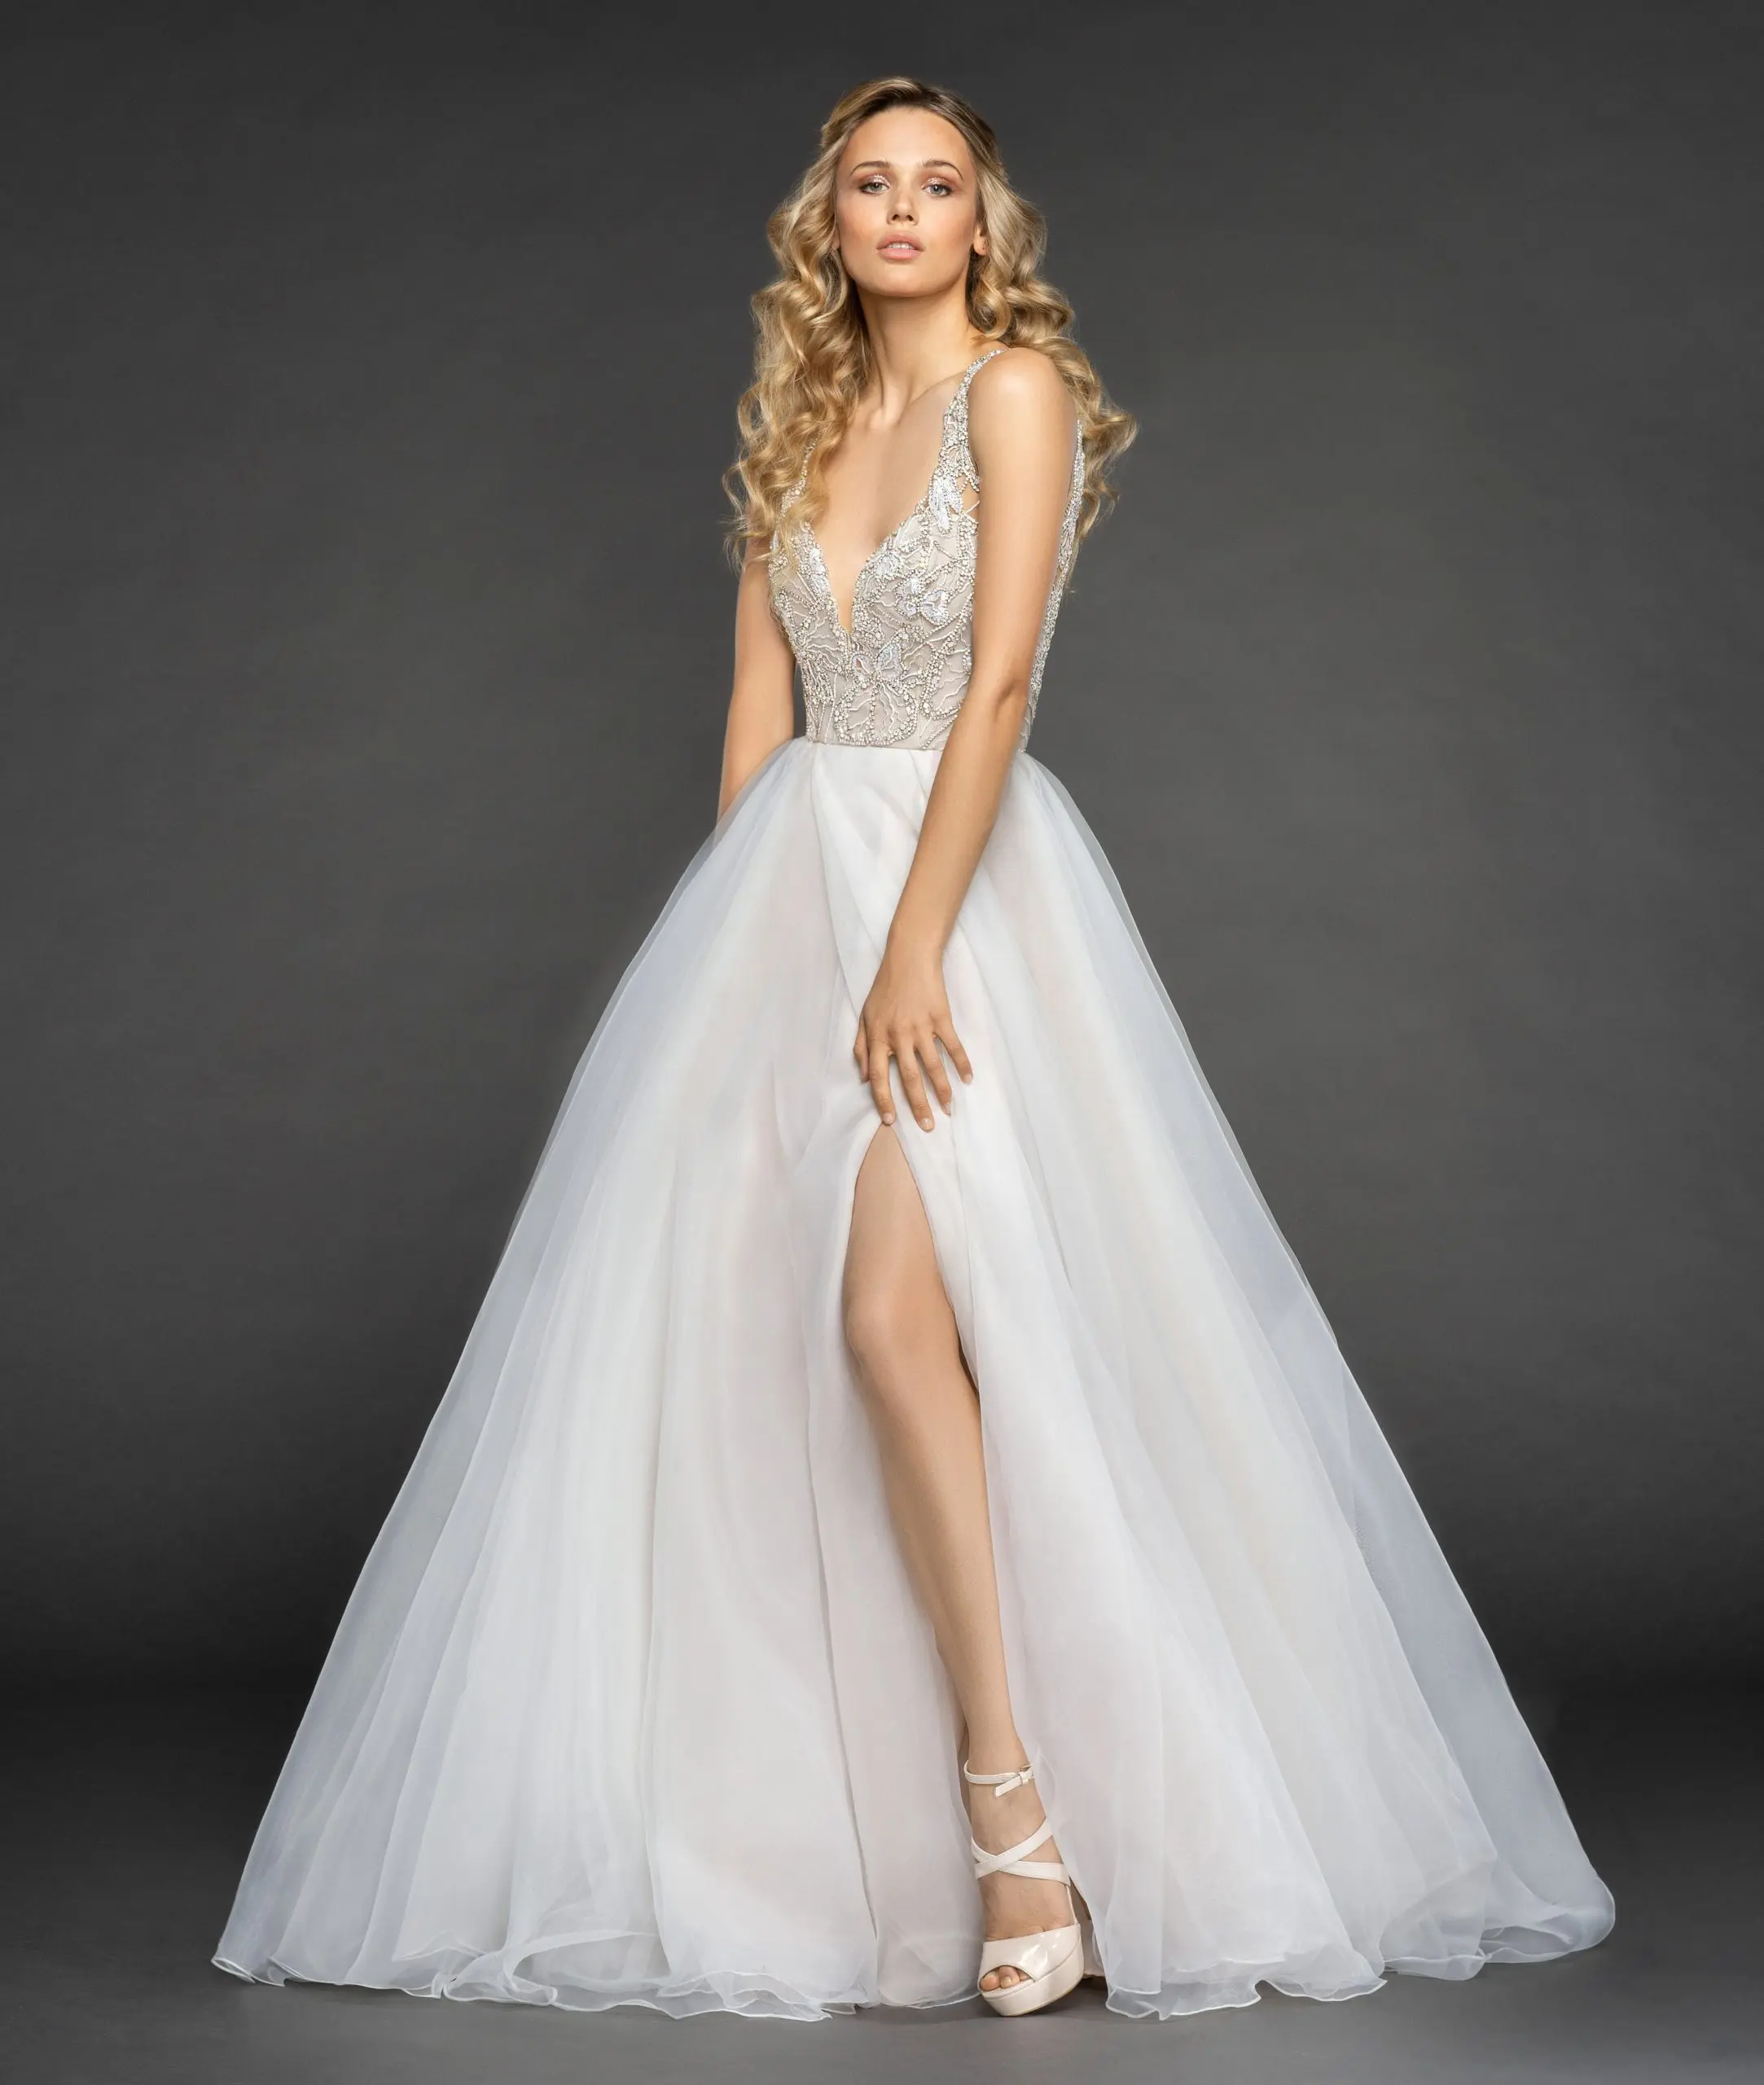 Lace A-line Wedding Dress With Deep V-neckline And High Slit